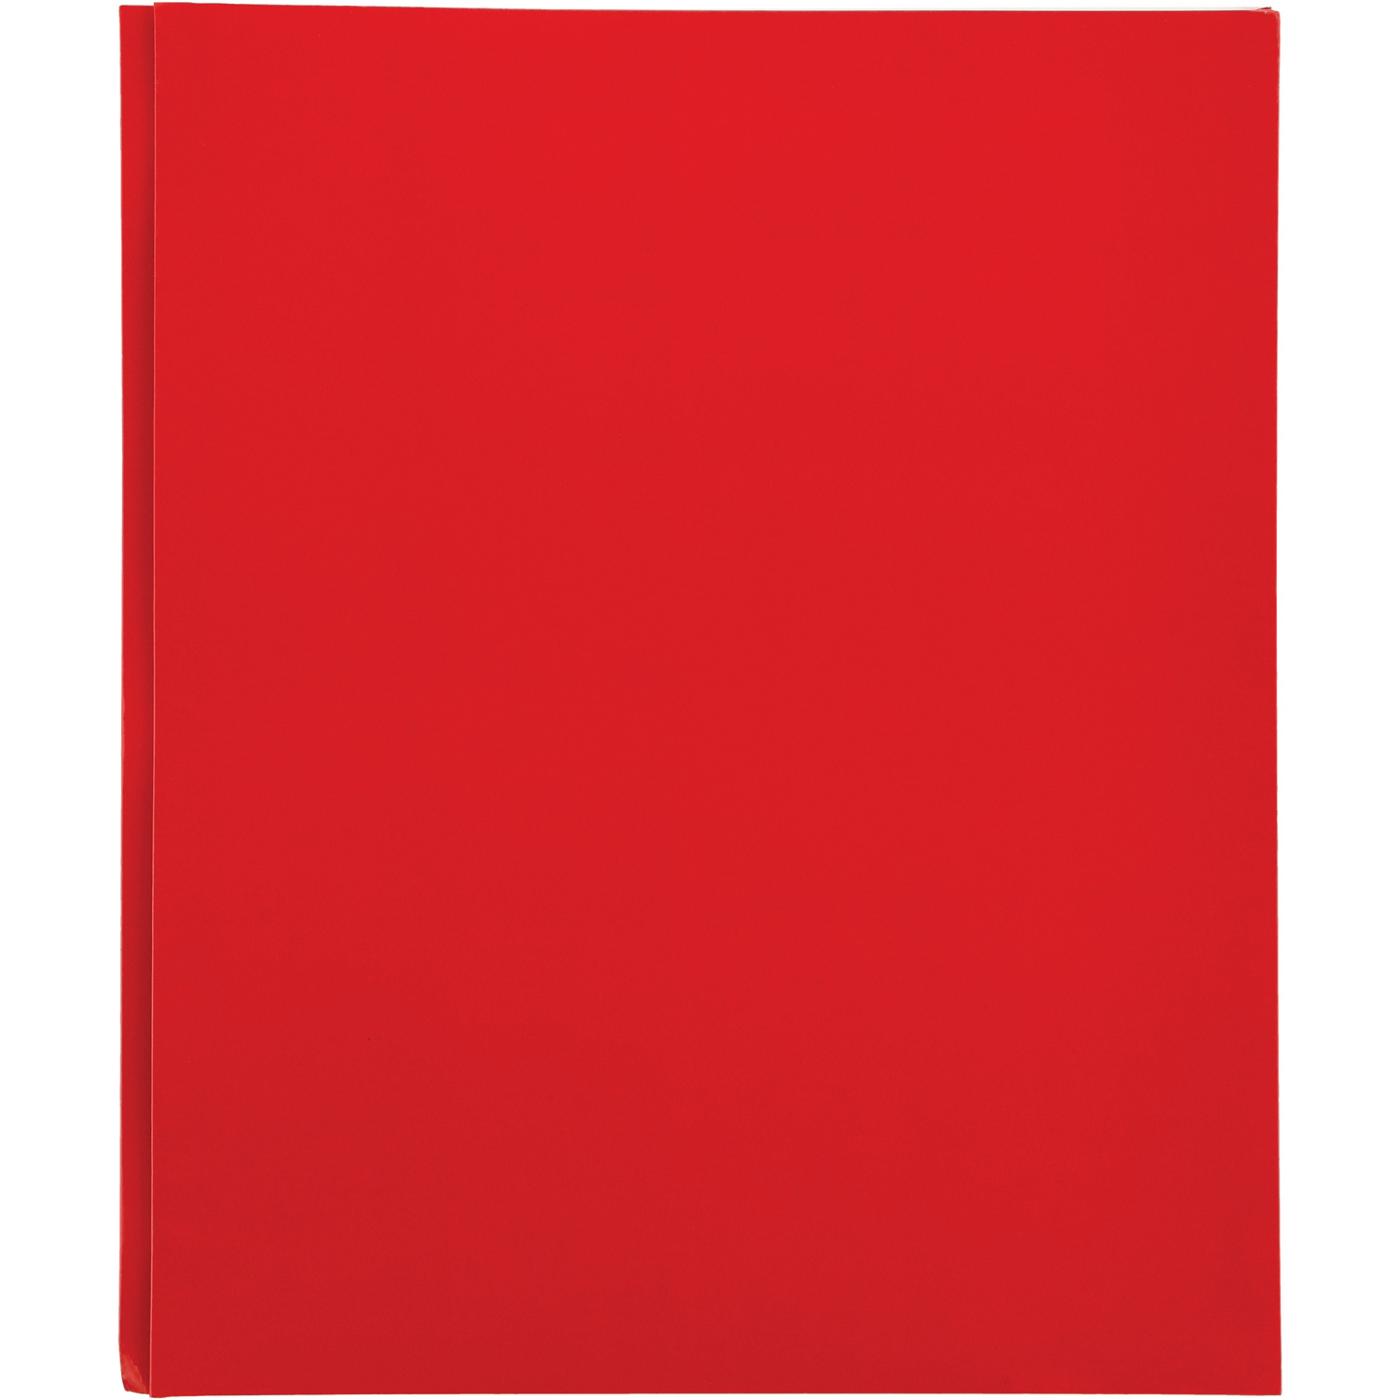 H-E-B Pocket Laminated Folder with Prongs - Red; image 1 of 2